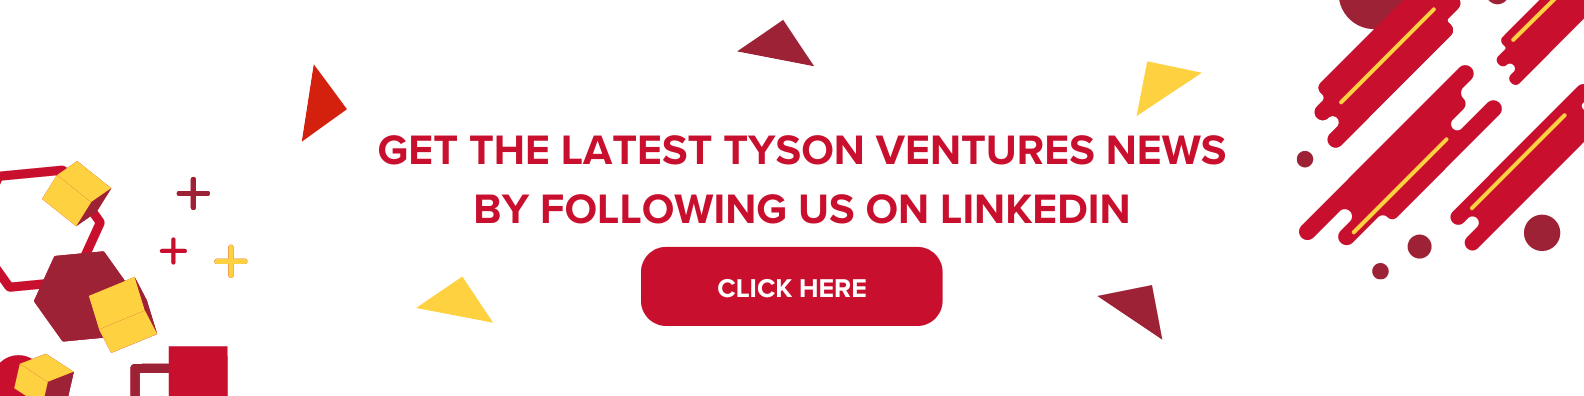 A branded image for Tyson Ventures LinkedIn profile